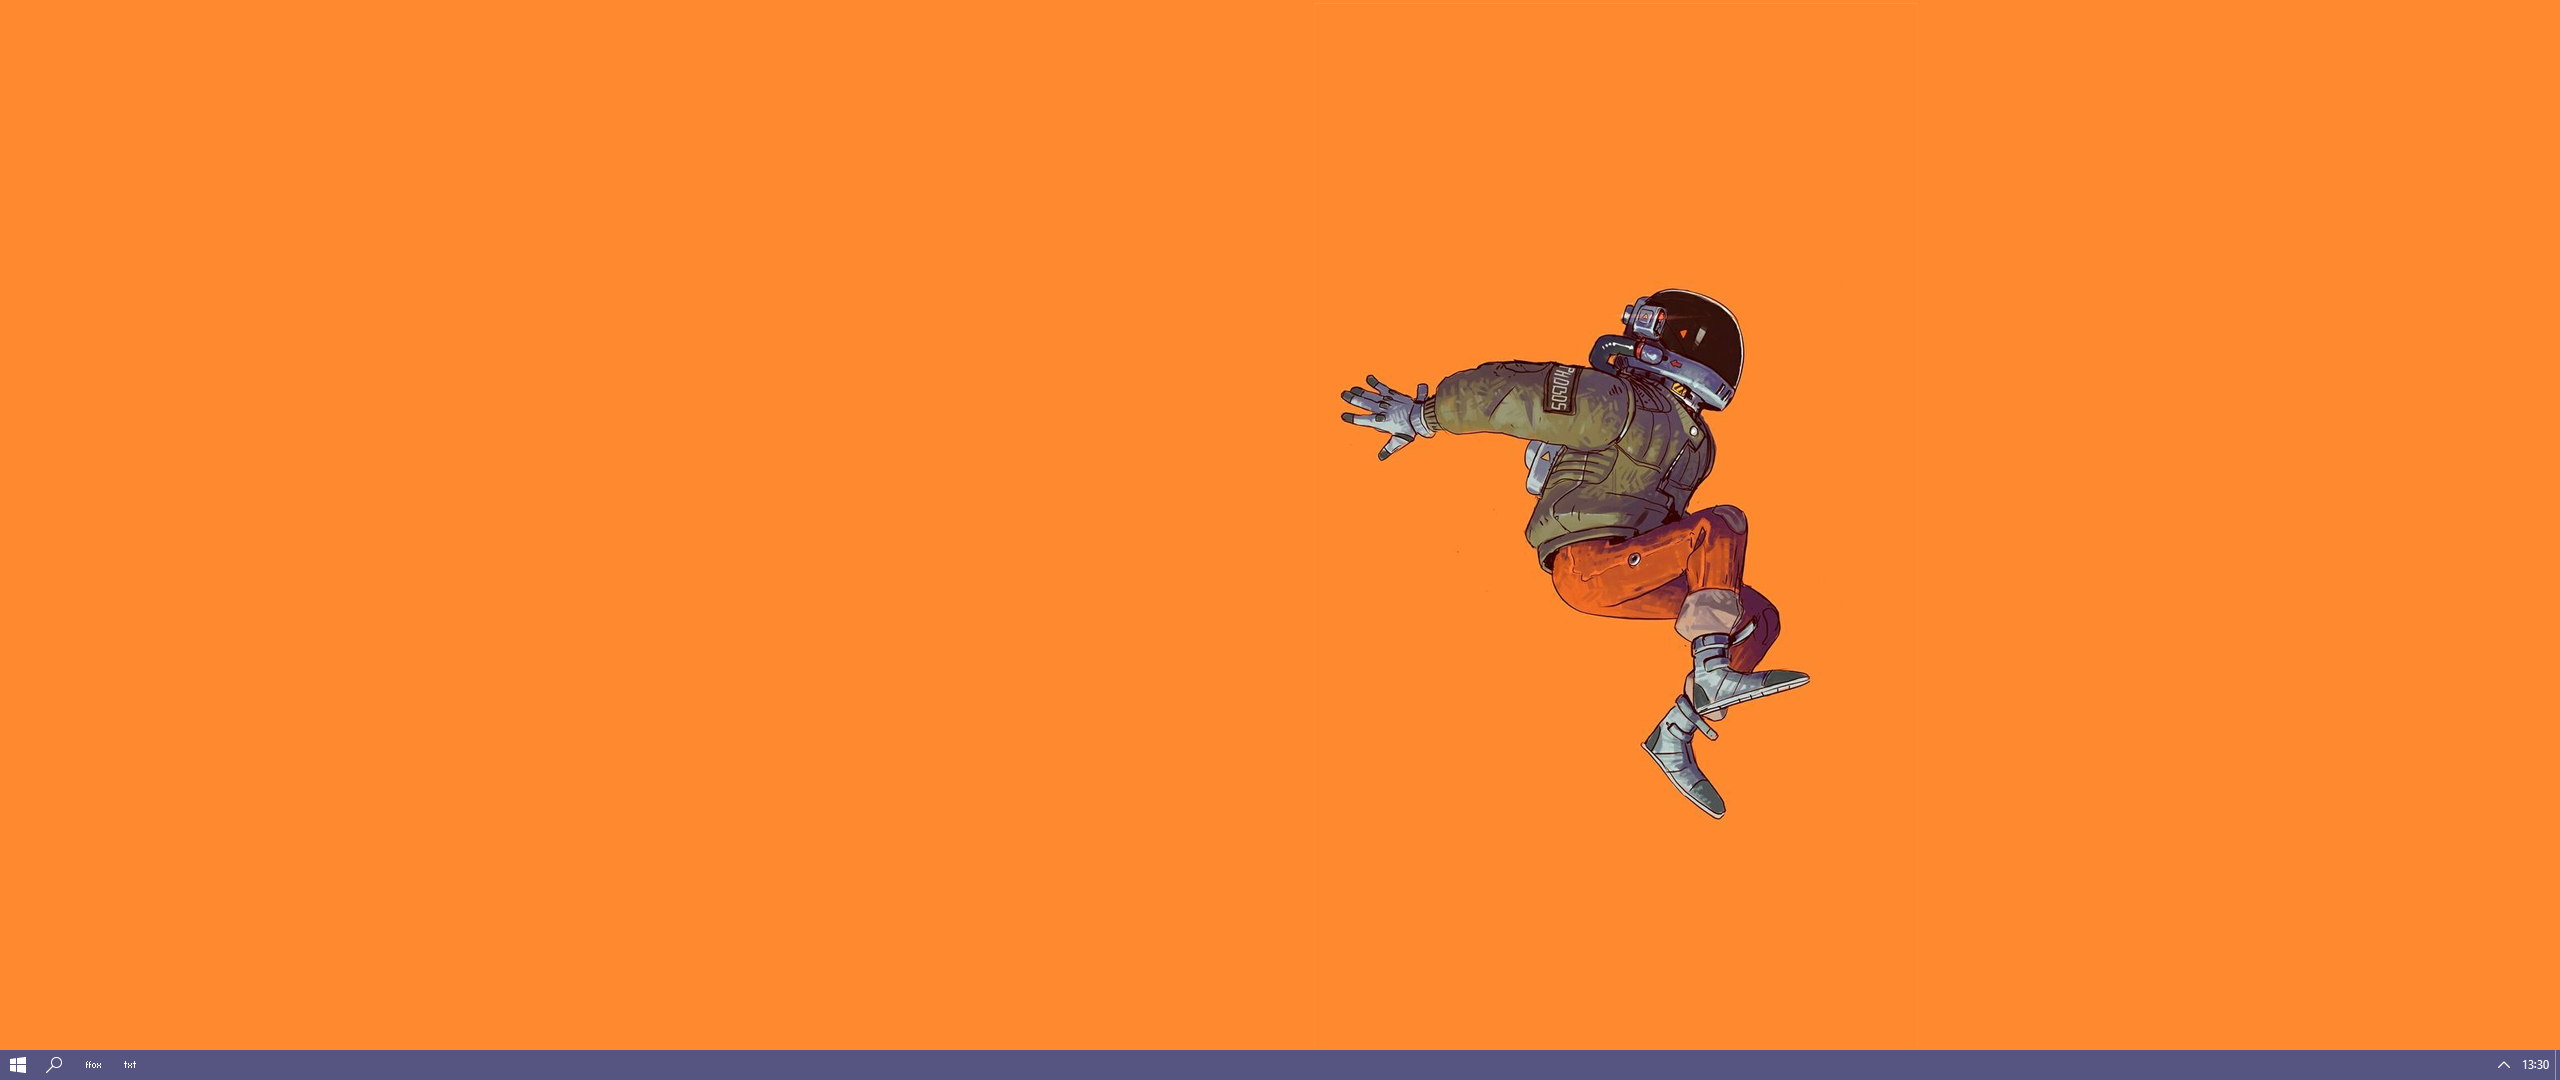 Minimal Orange Desktop